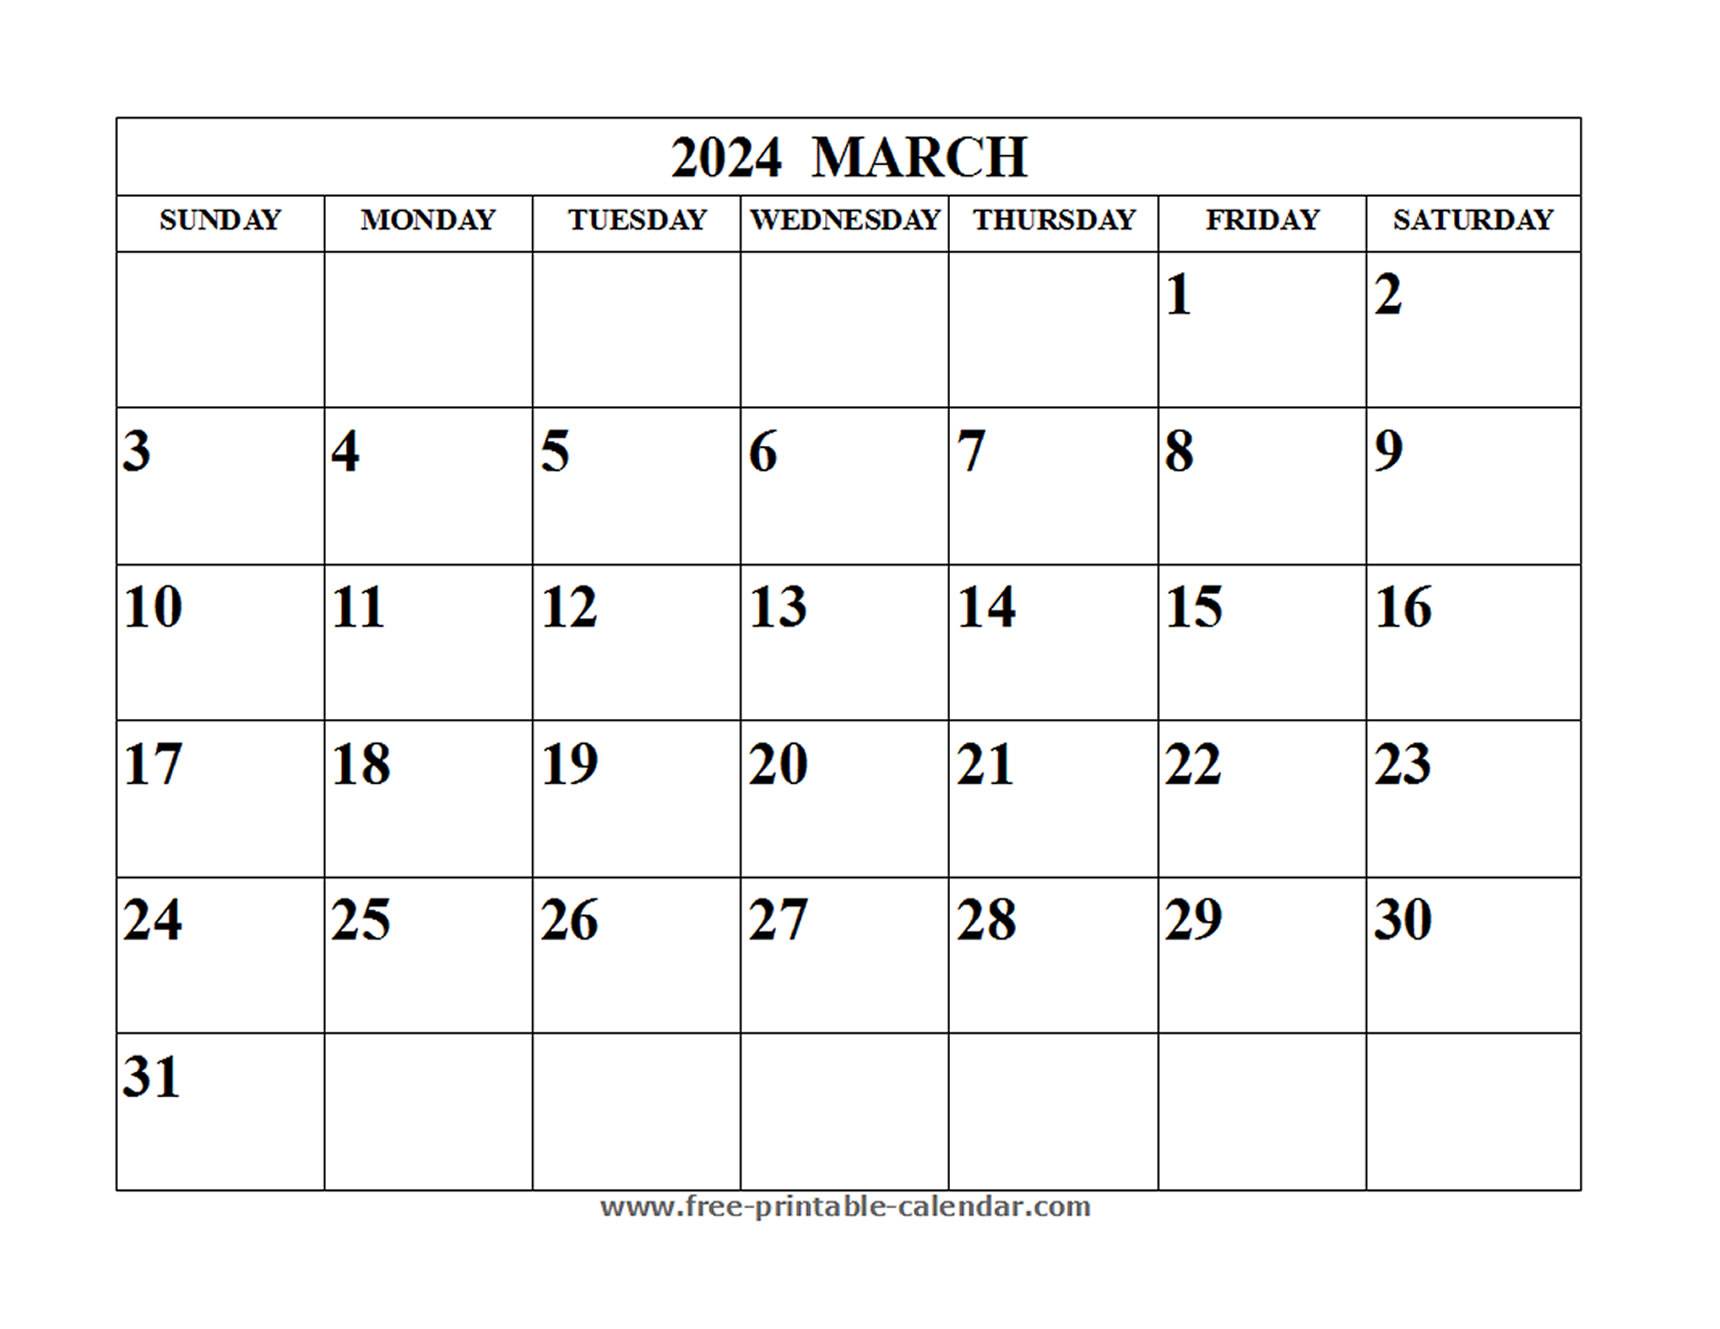 Blank March 2024 Calendar - Free-printable-calendar.com